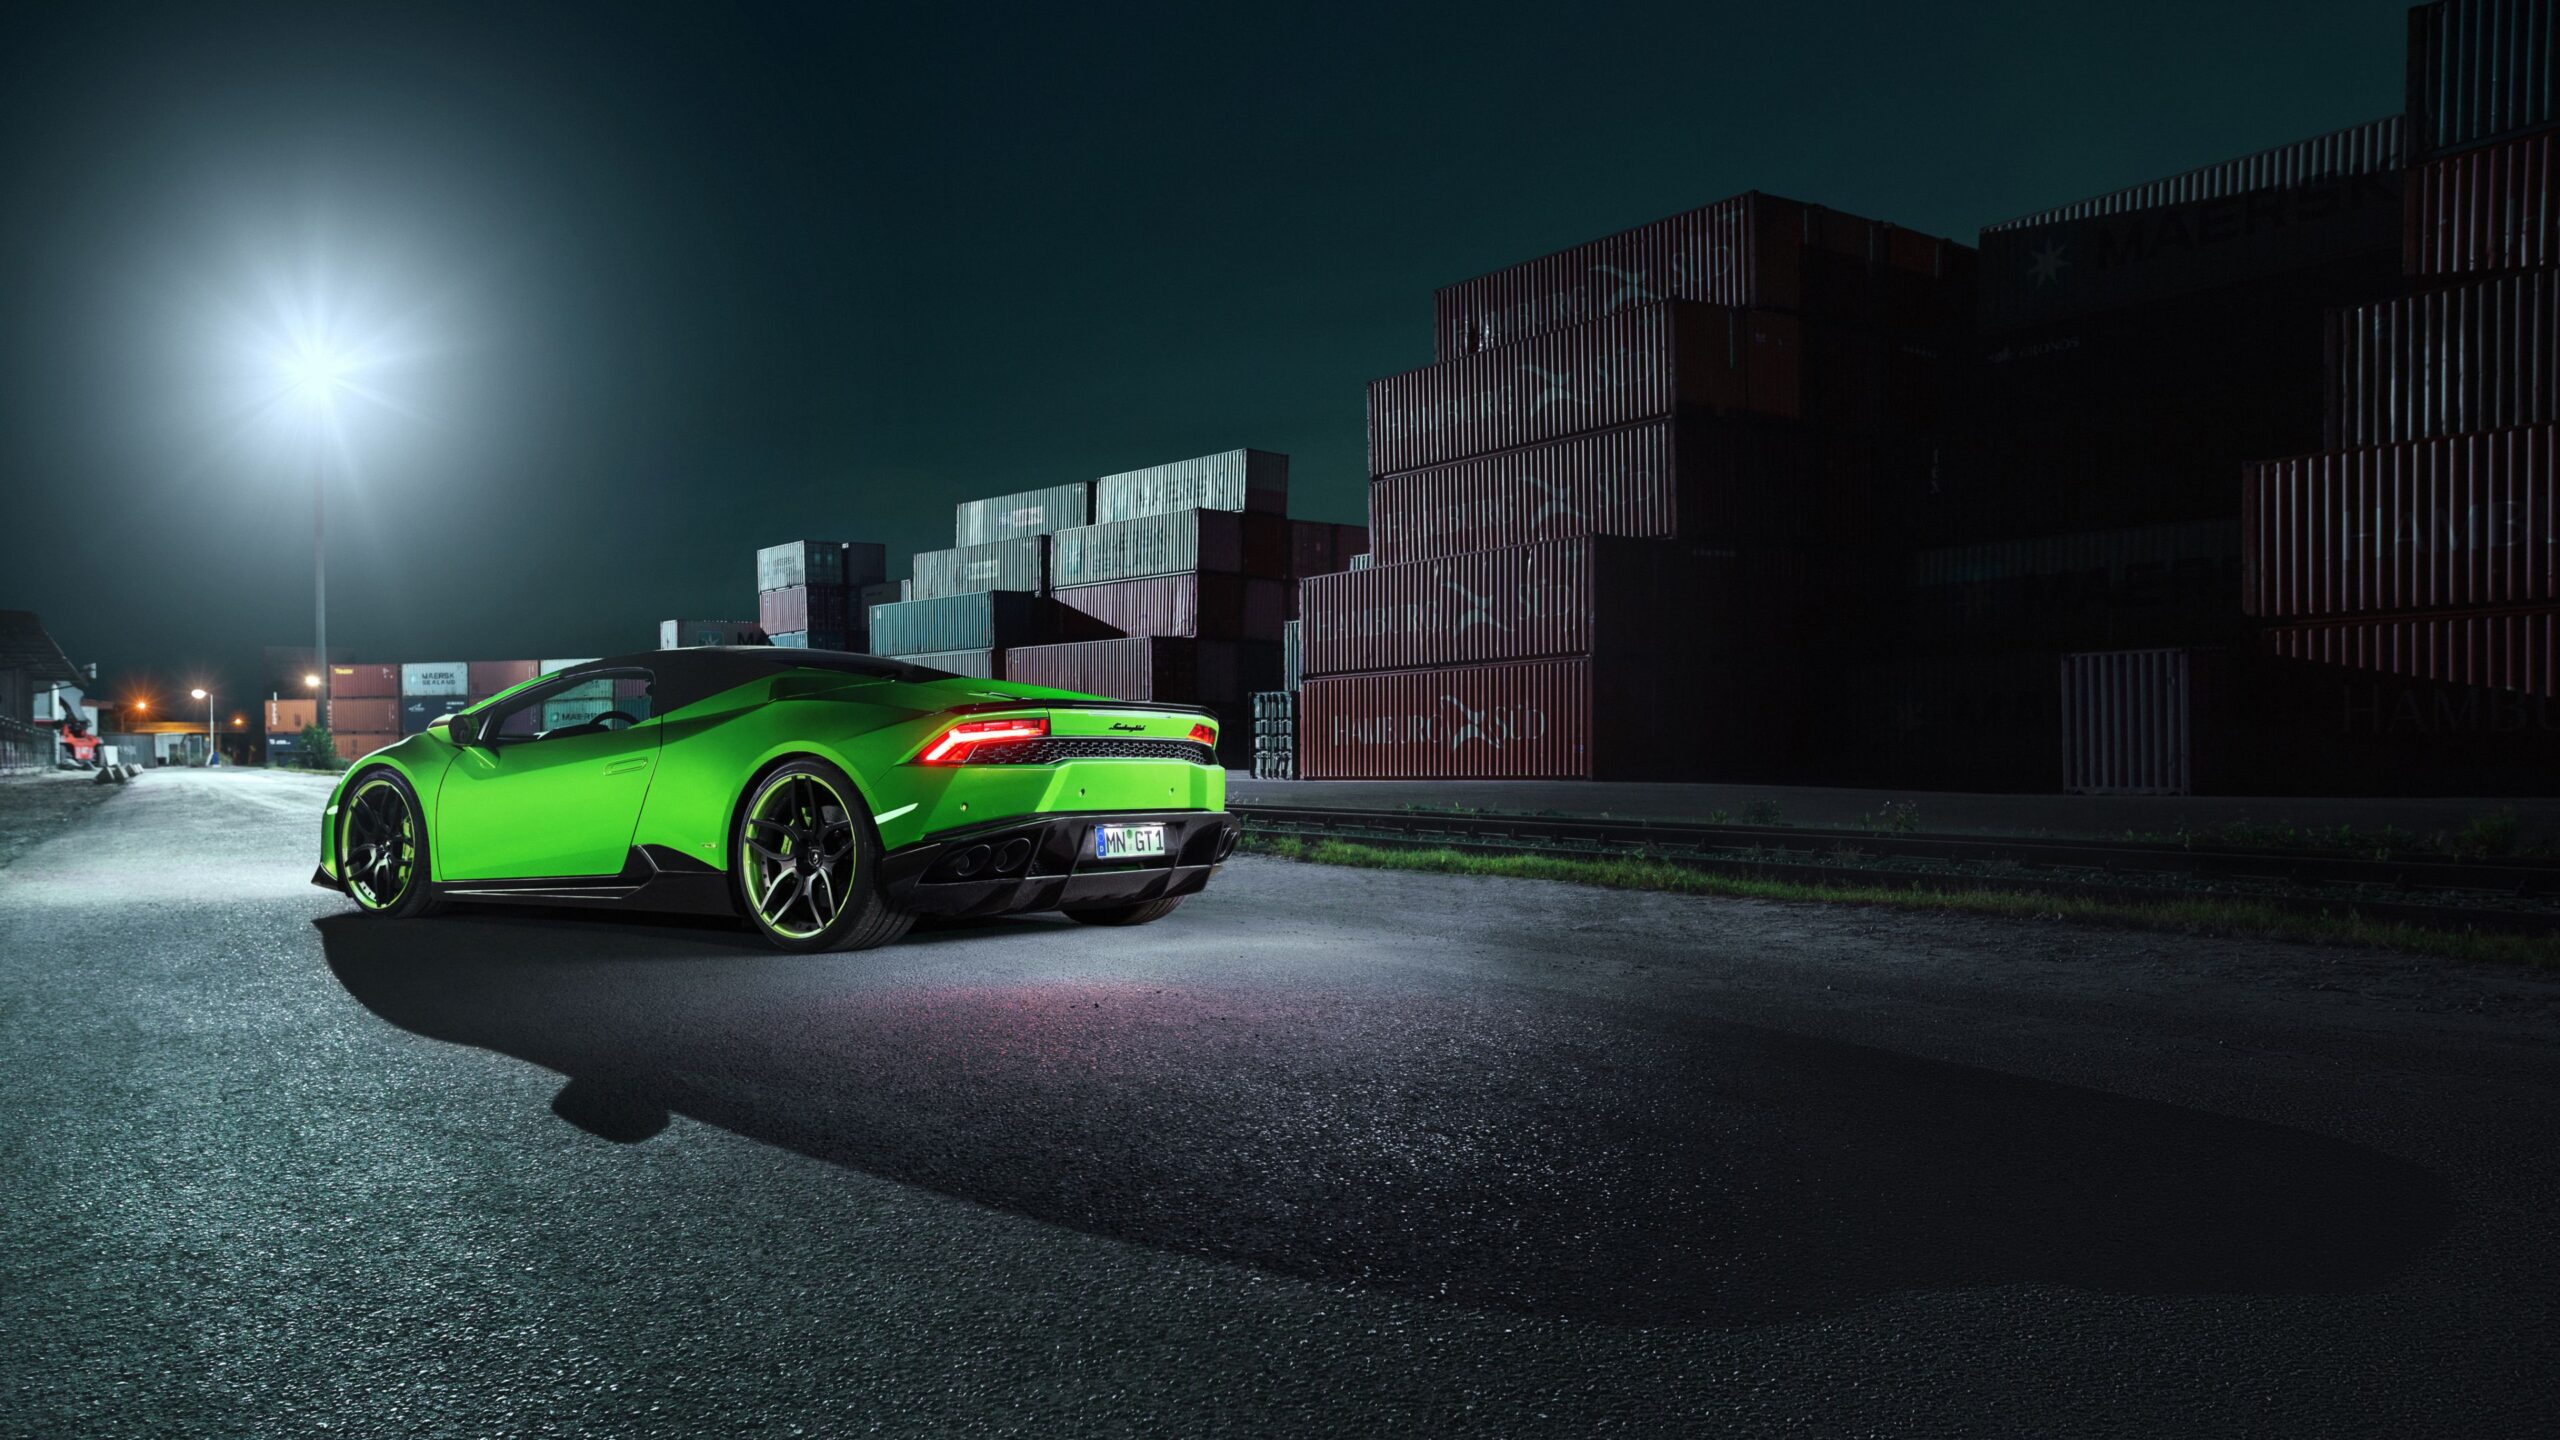 K Ultra 2K Lamborghini Wallpapers HD, Desk 4K Backgrounds